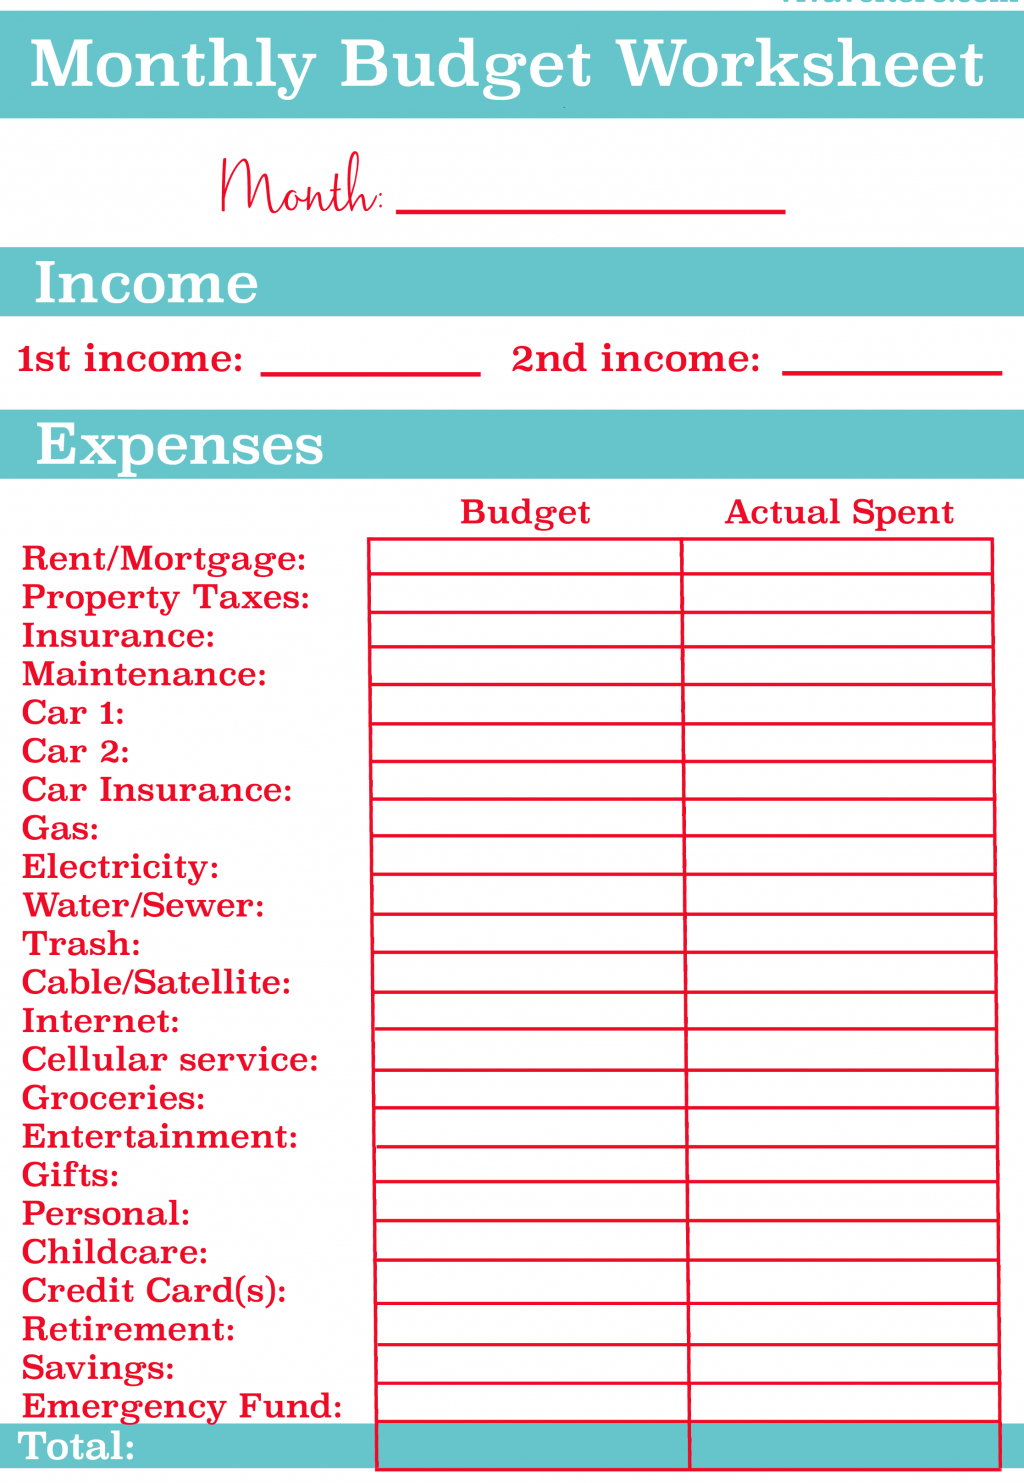 Weekly Budget Spreadsheet Bi Worksheet Pdf Free Download Blank Excel With Regard To Weekly Budget Worksheet Pdf